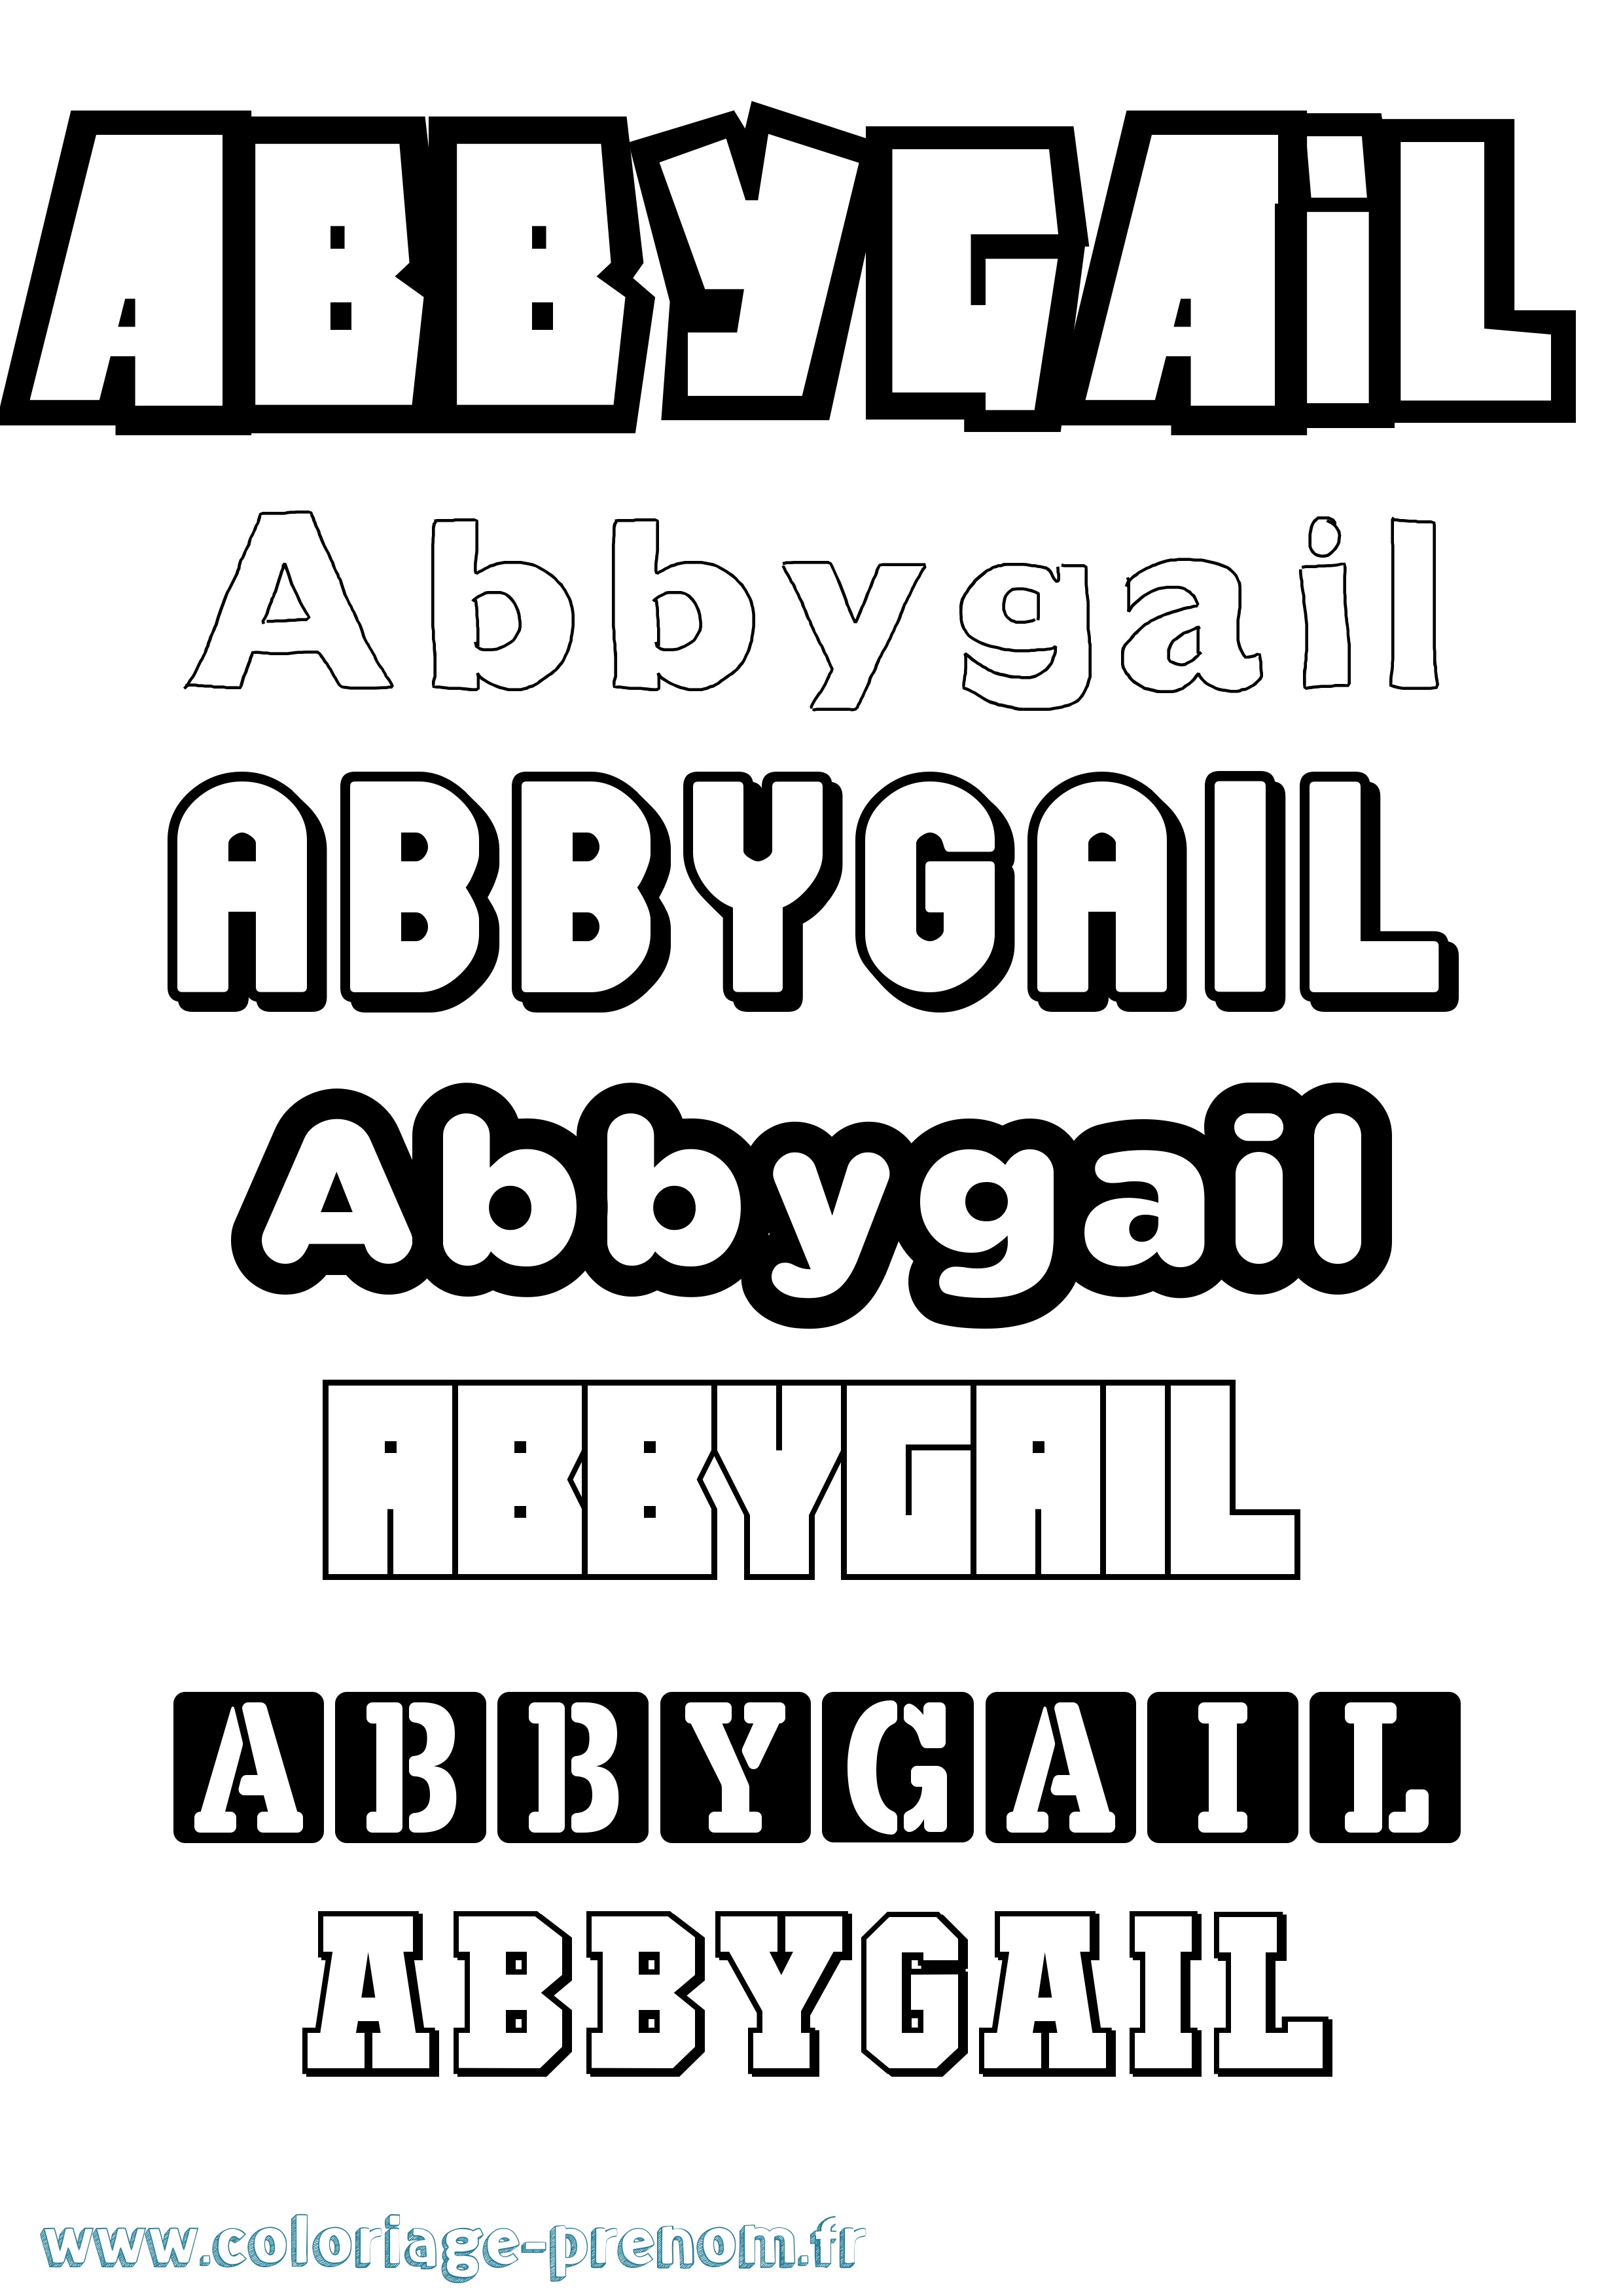 Coloriage prénom Abbygail Simple